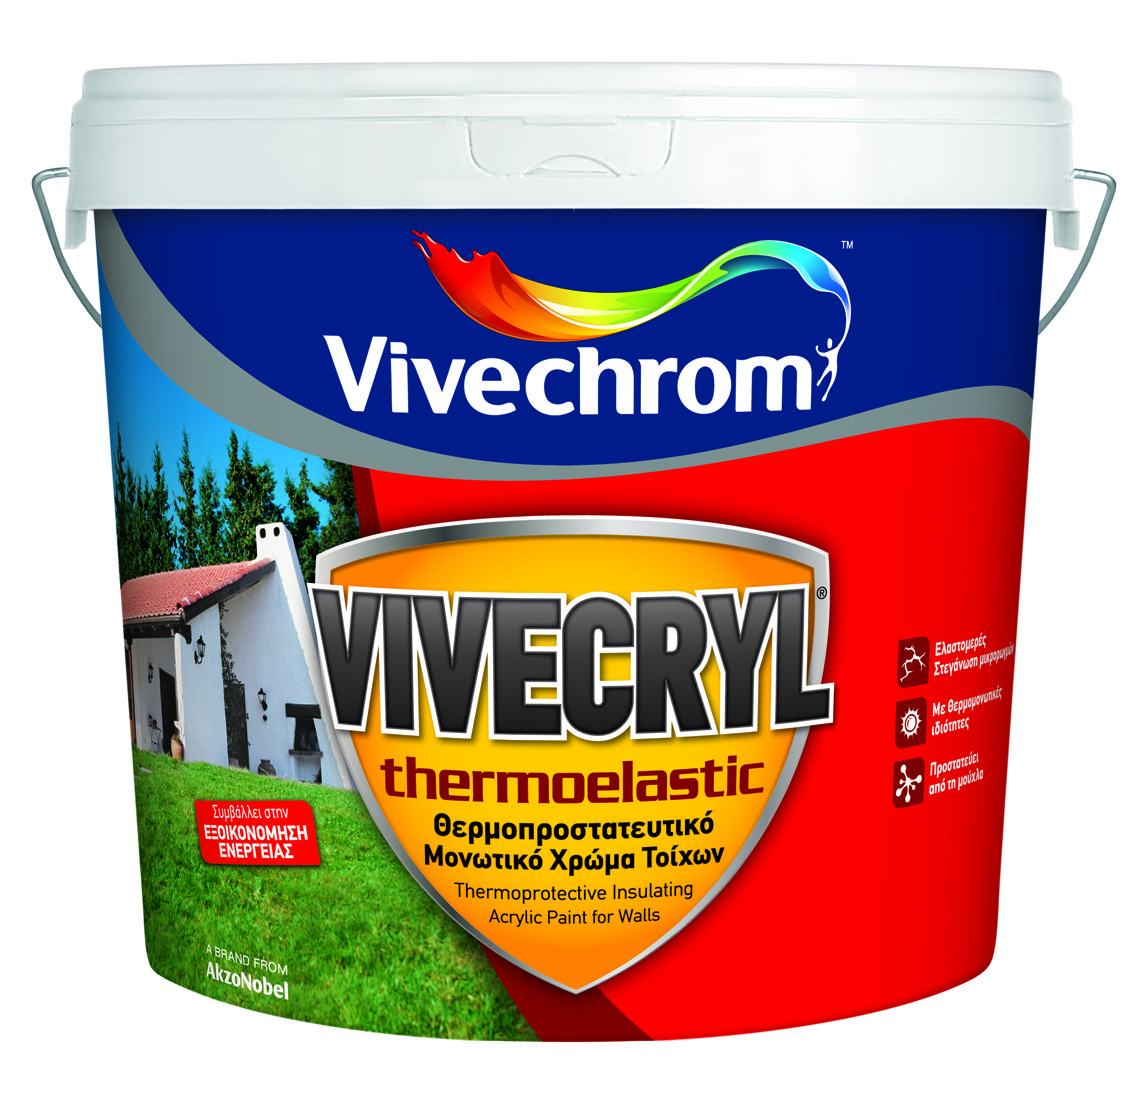 Vivechrom Vivecry Θερμοπροστατευτικό Οικολογικό Ακρυλική Βάση Matt Finish Mixing P 10L